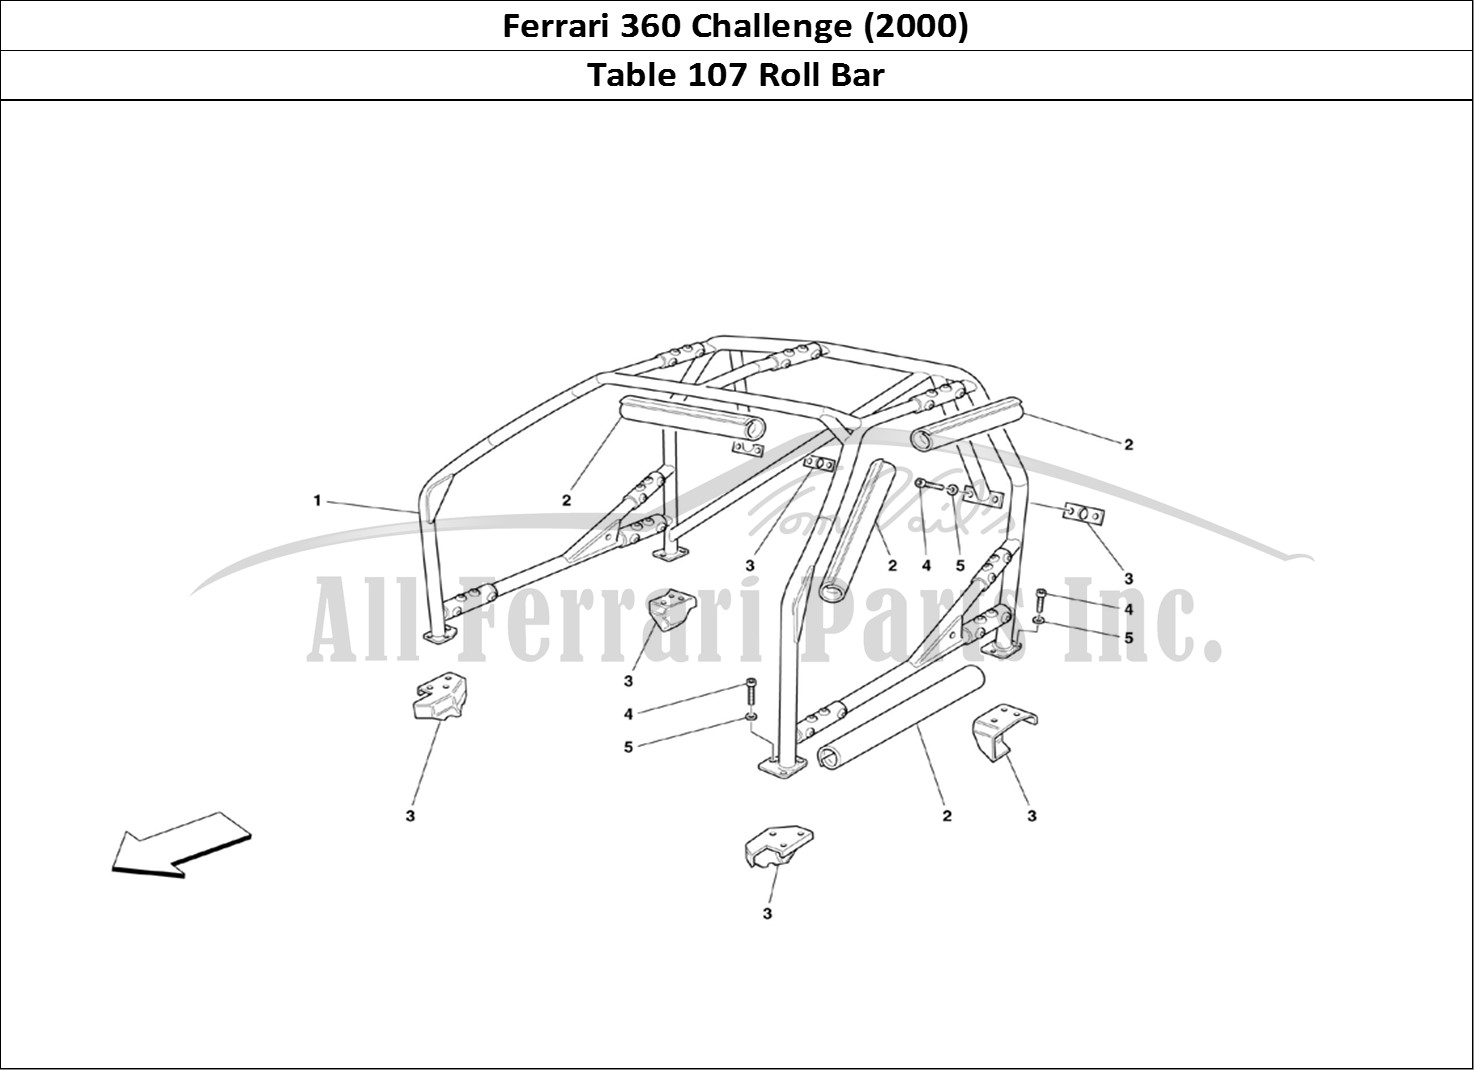 Ferrari Parts Ferrari 360 Challenge (2000) Page 107 Roll-Bar